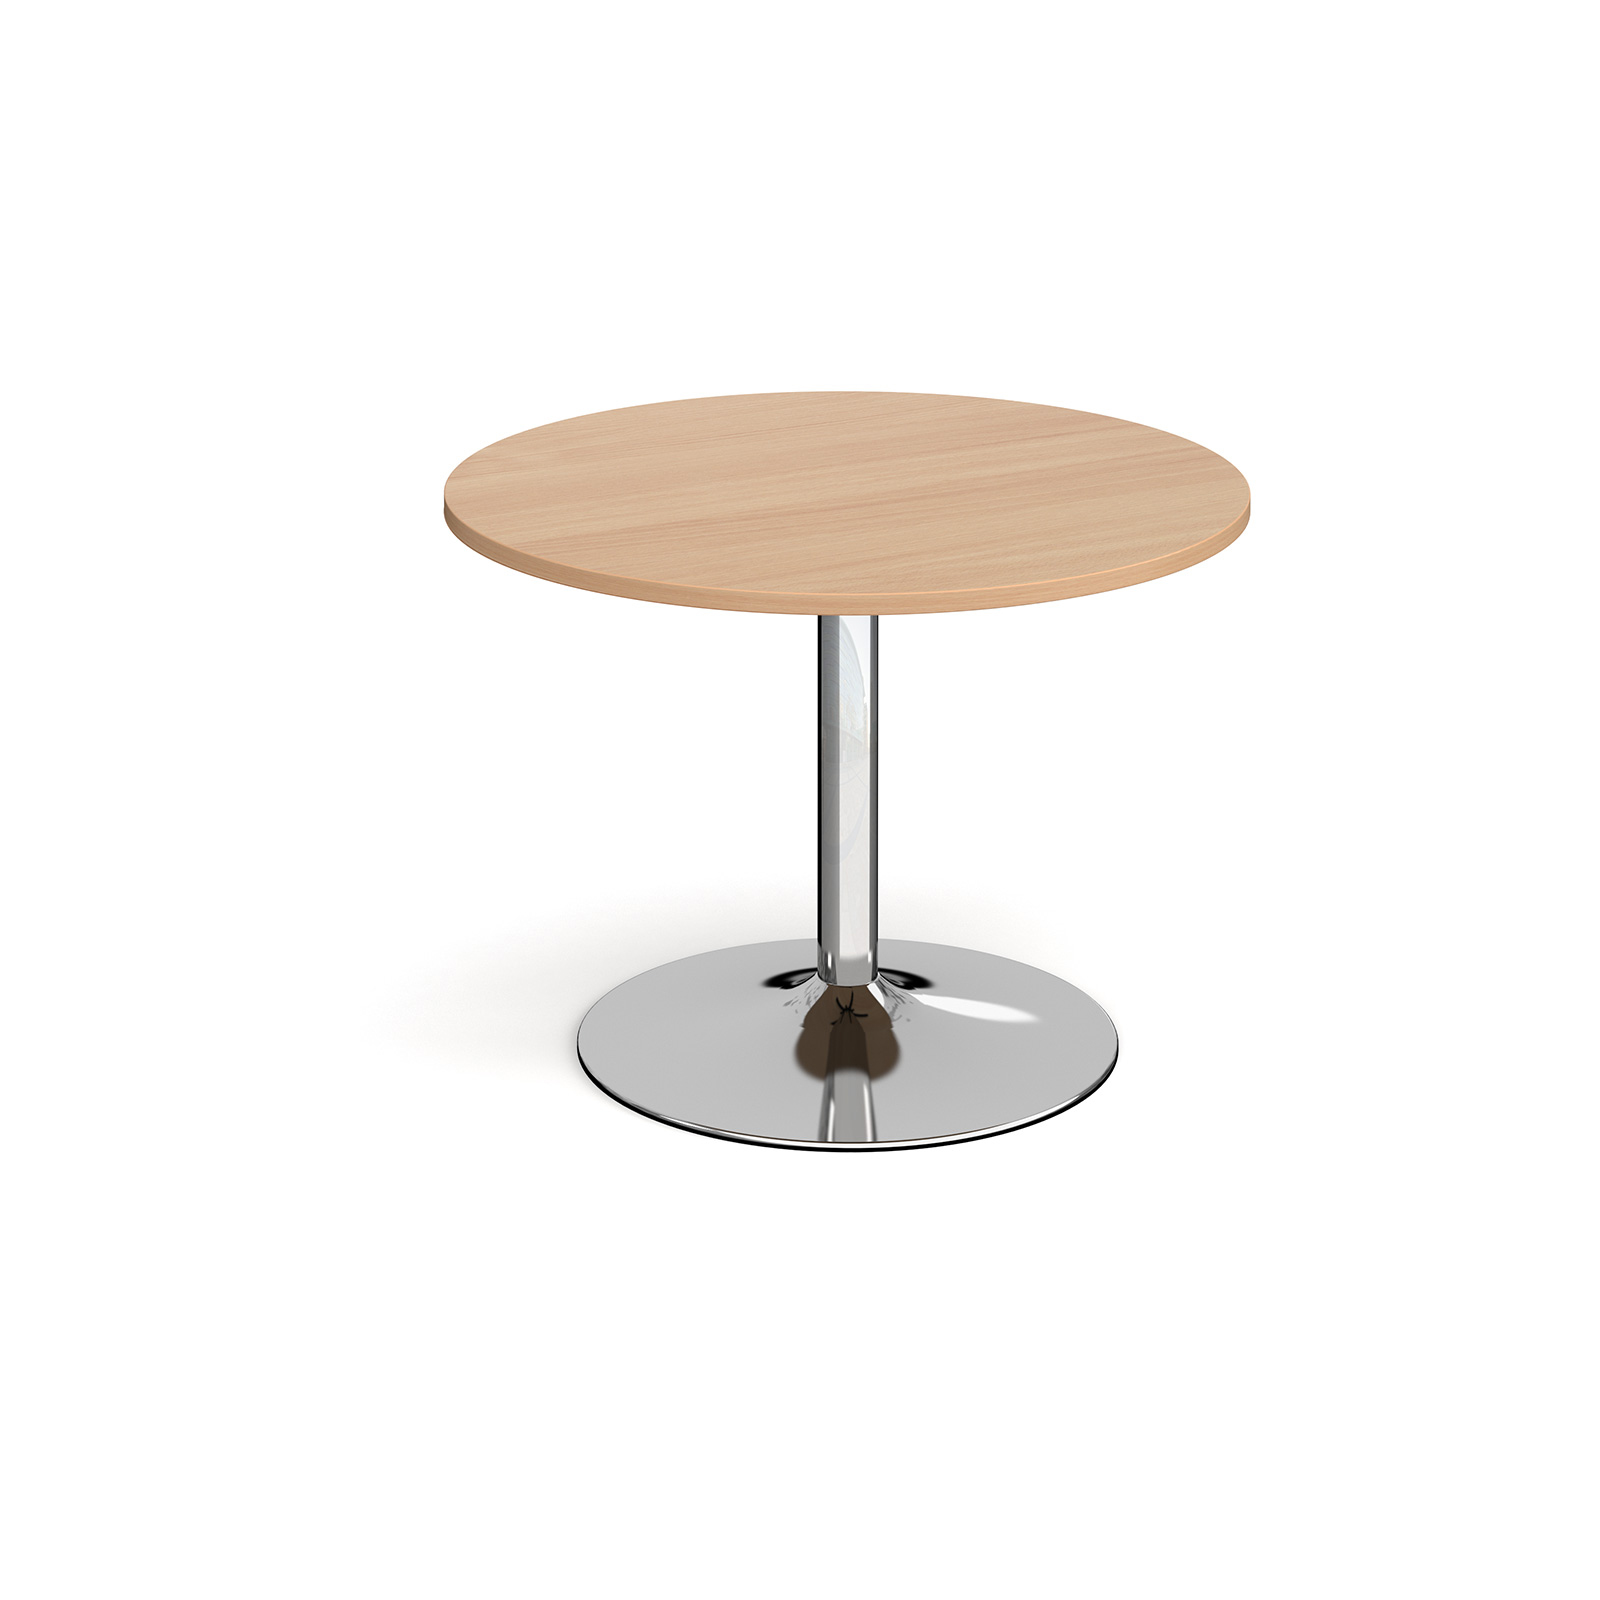 Trumpet base circular boardroom table 1000mm - chrome base, beech top